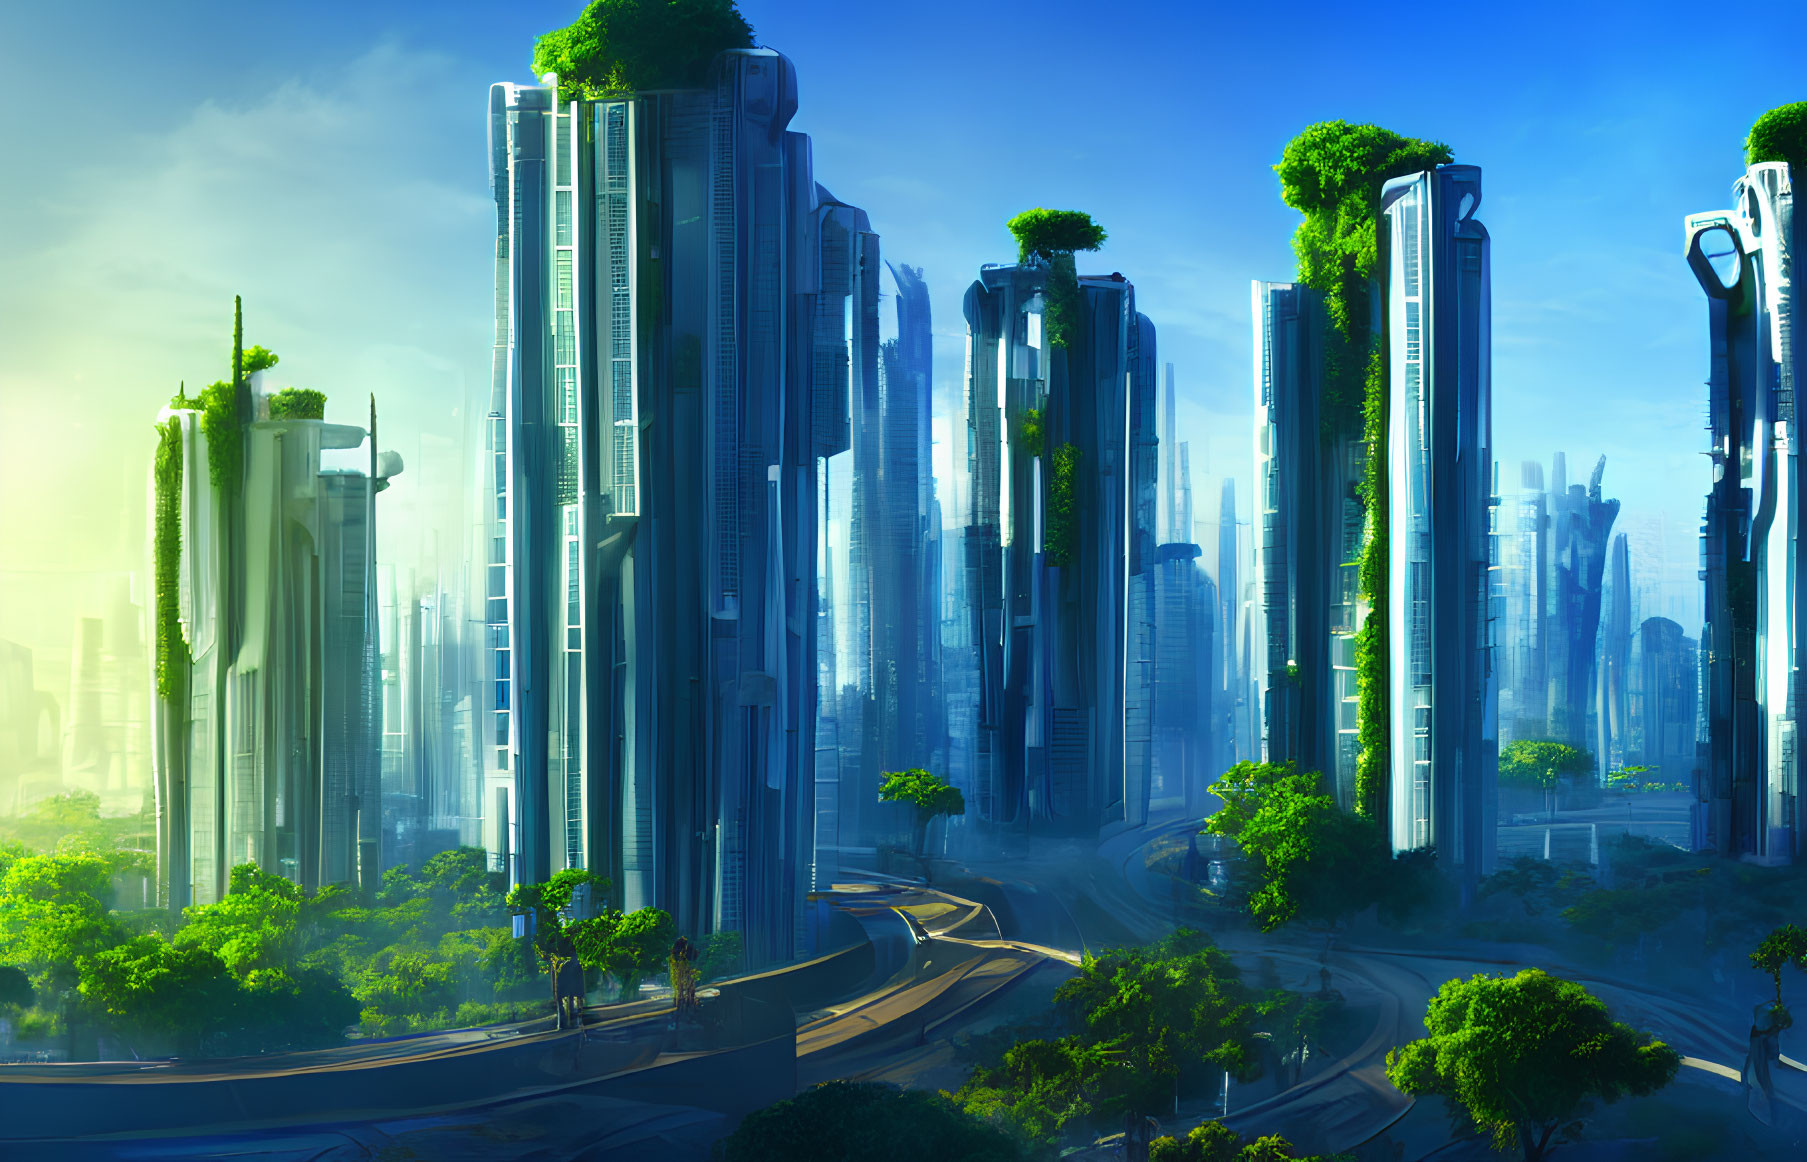 Futuristic cityscape featuring greenery-adorned skyscrapers in soft blue light